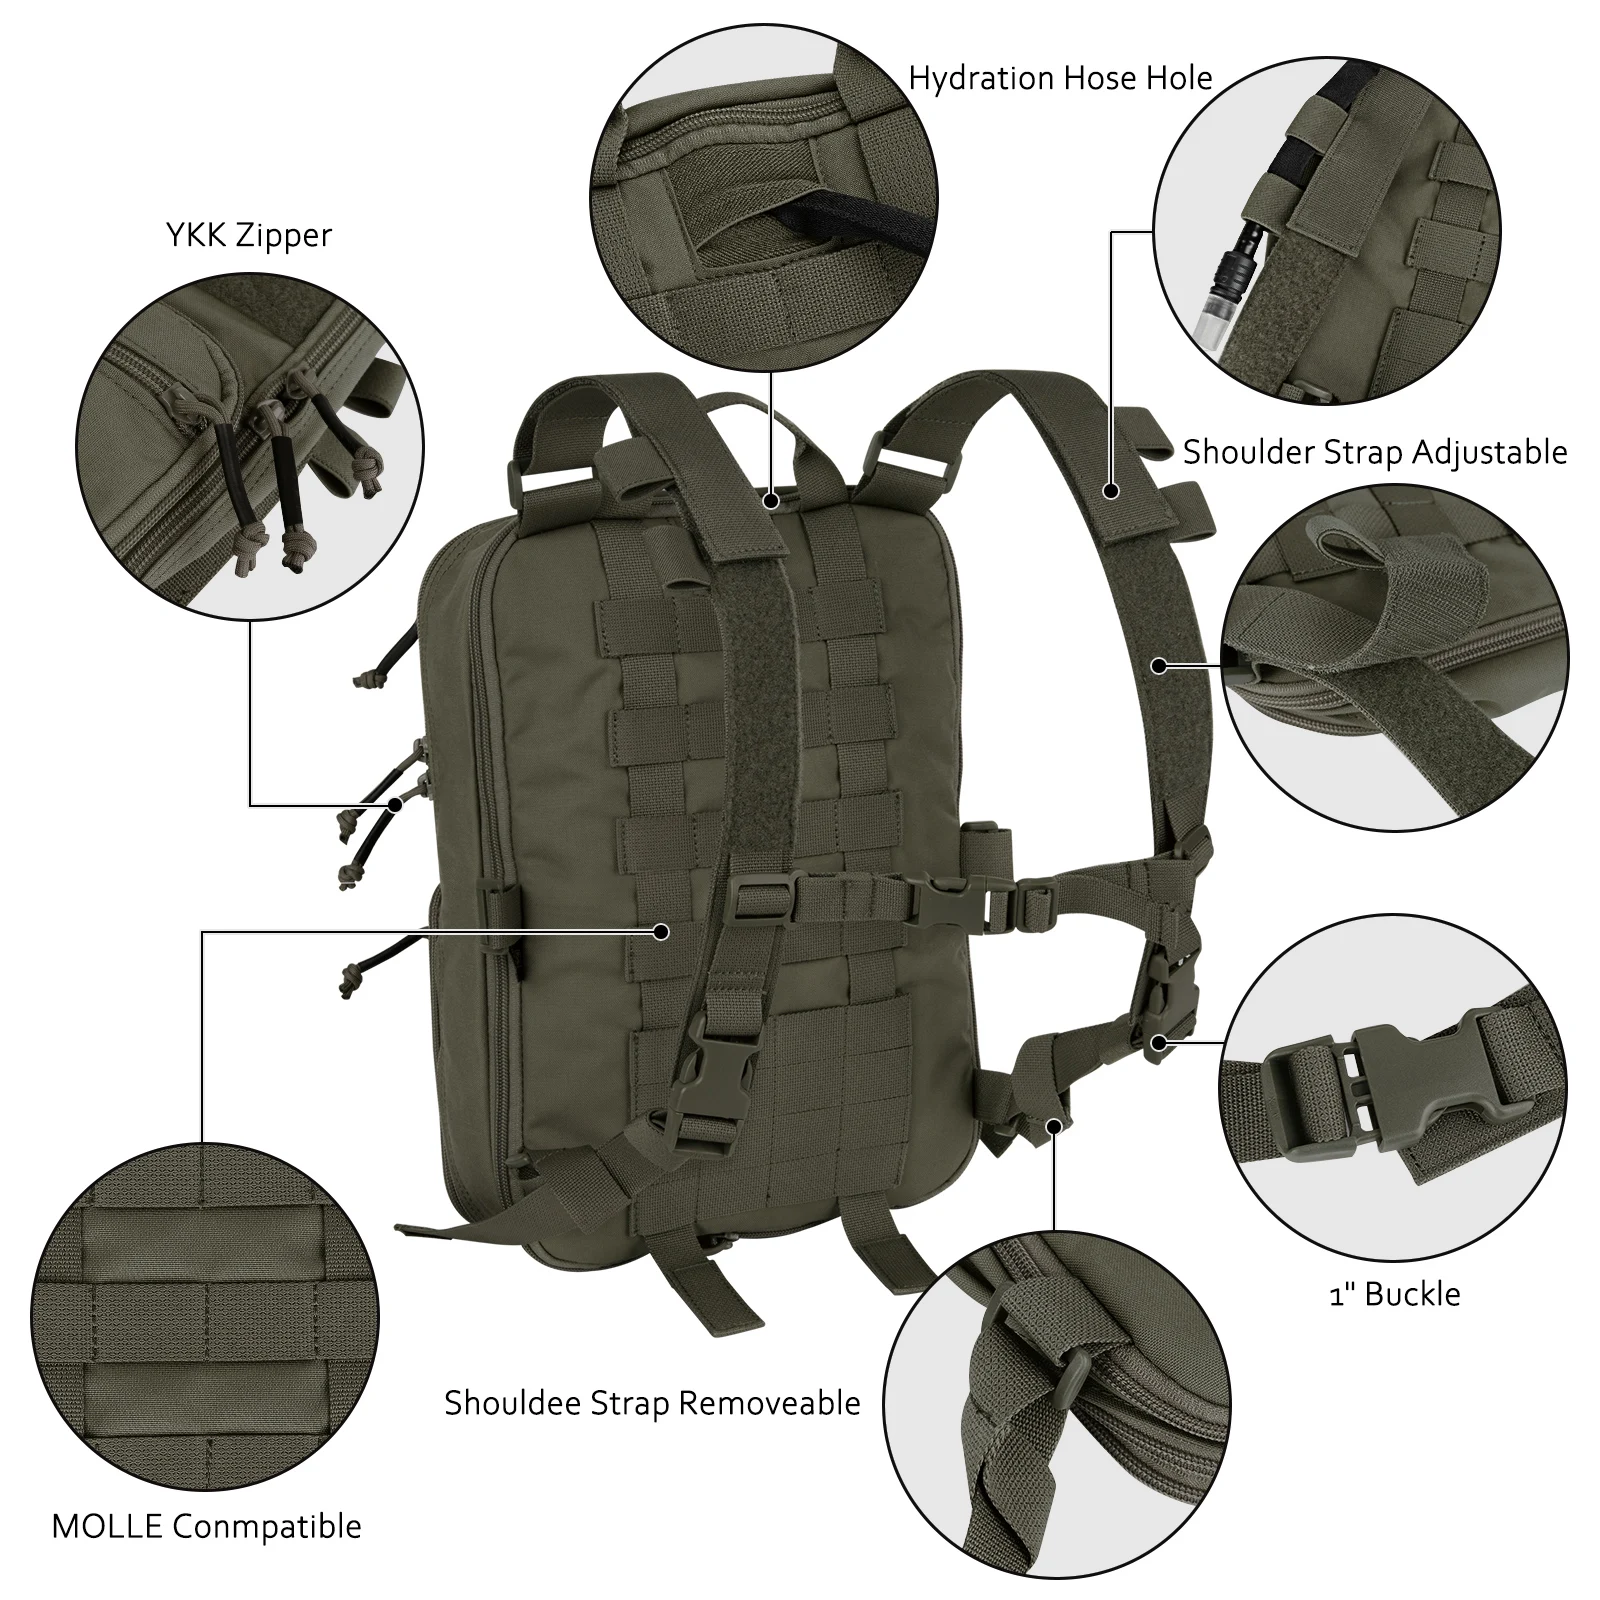 KRYDEX Tactical Flatpack D3 zaino borsa con D3CR Chest Rig Vest Rifle AK M4 Pistol Magazine Pouch caccia Outdoor escursionismo Gear